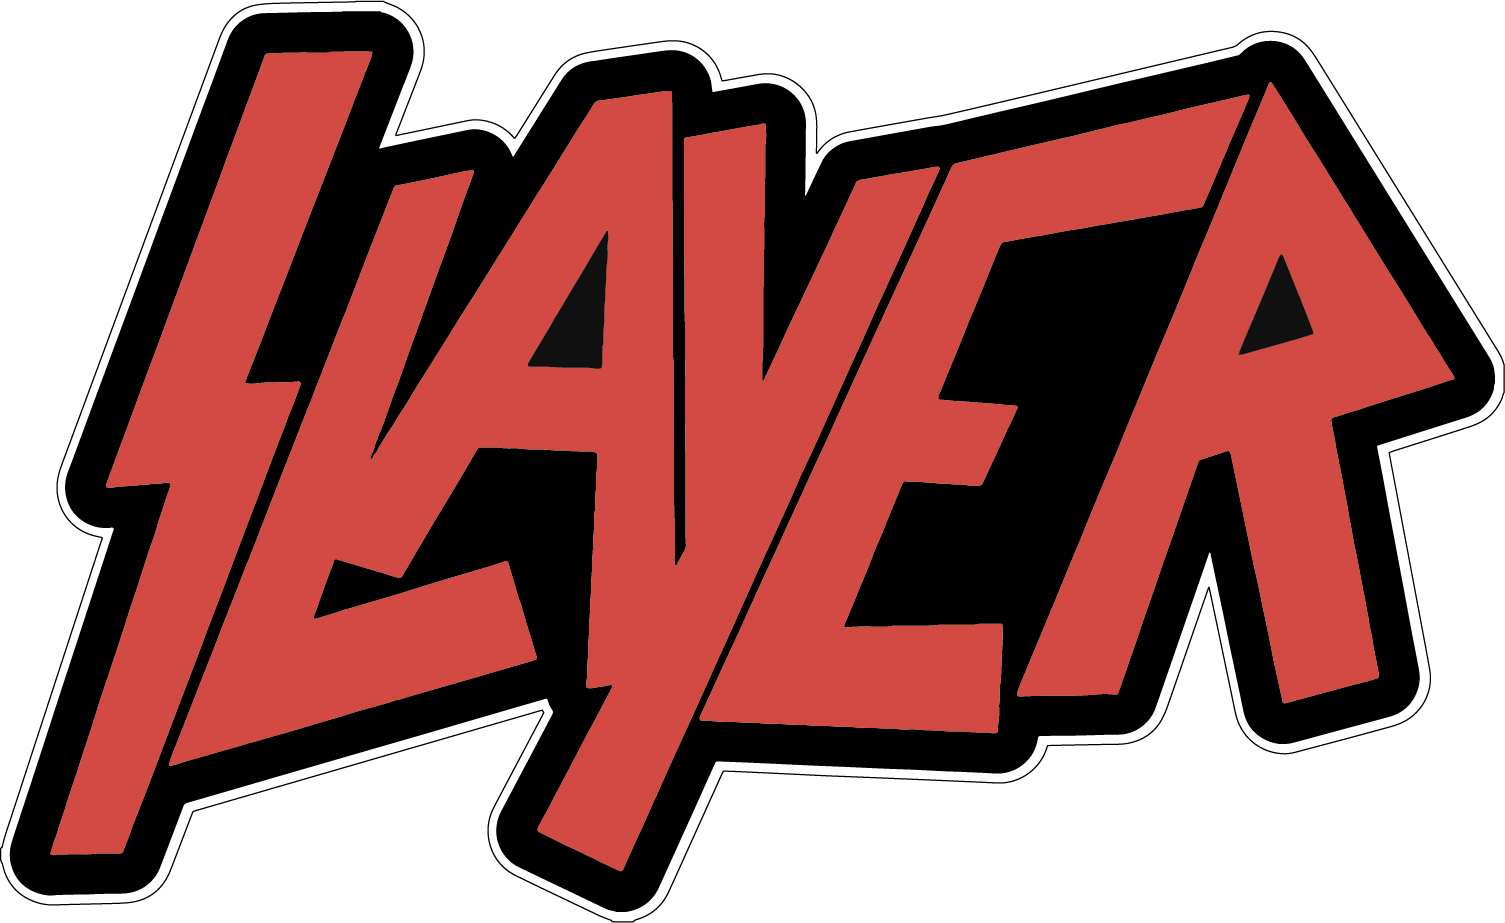 slayer logo font